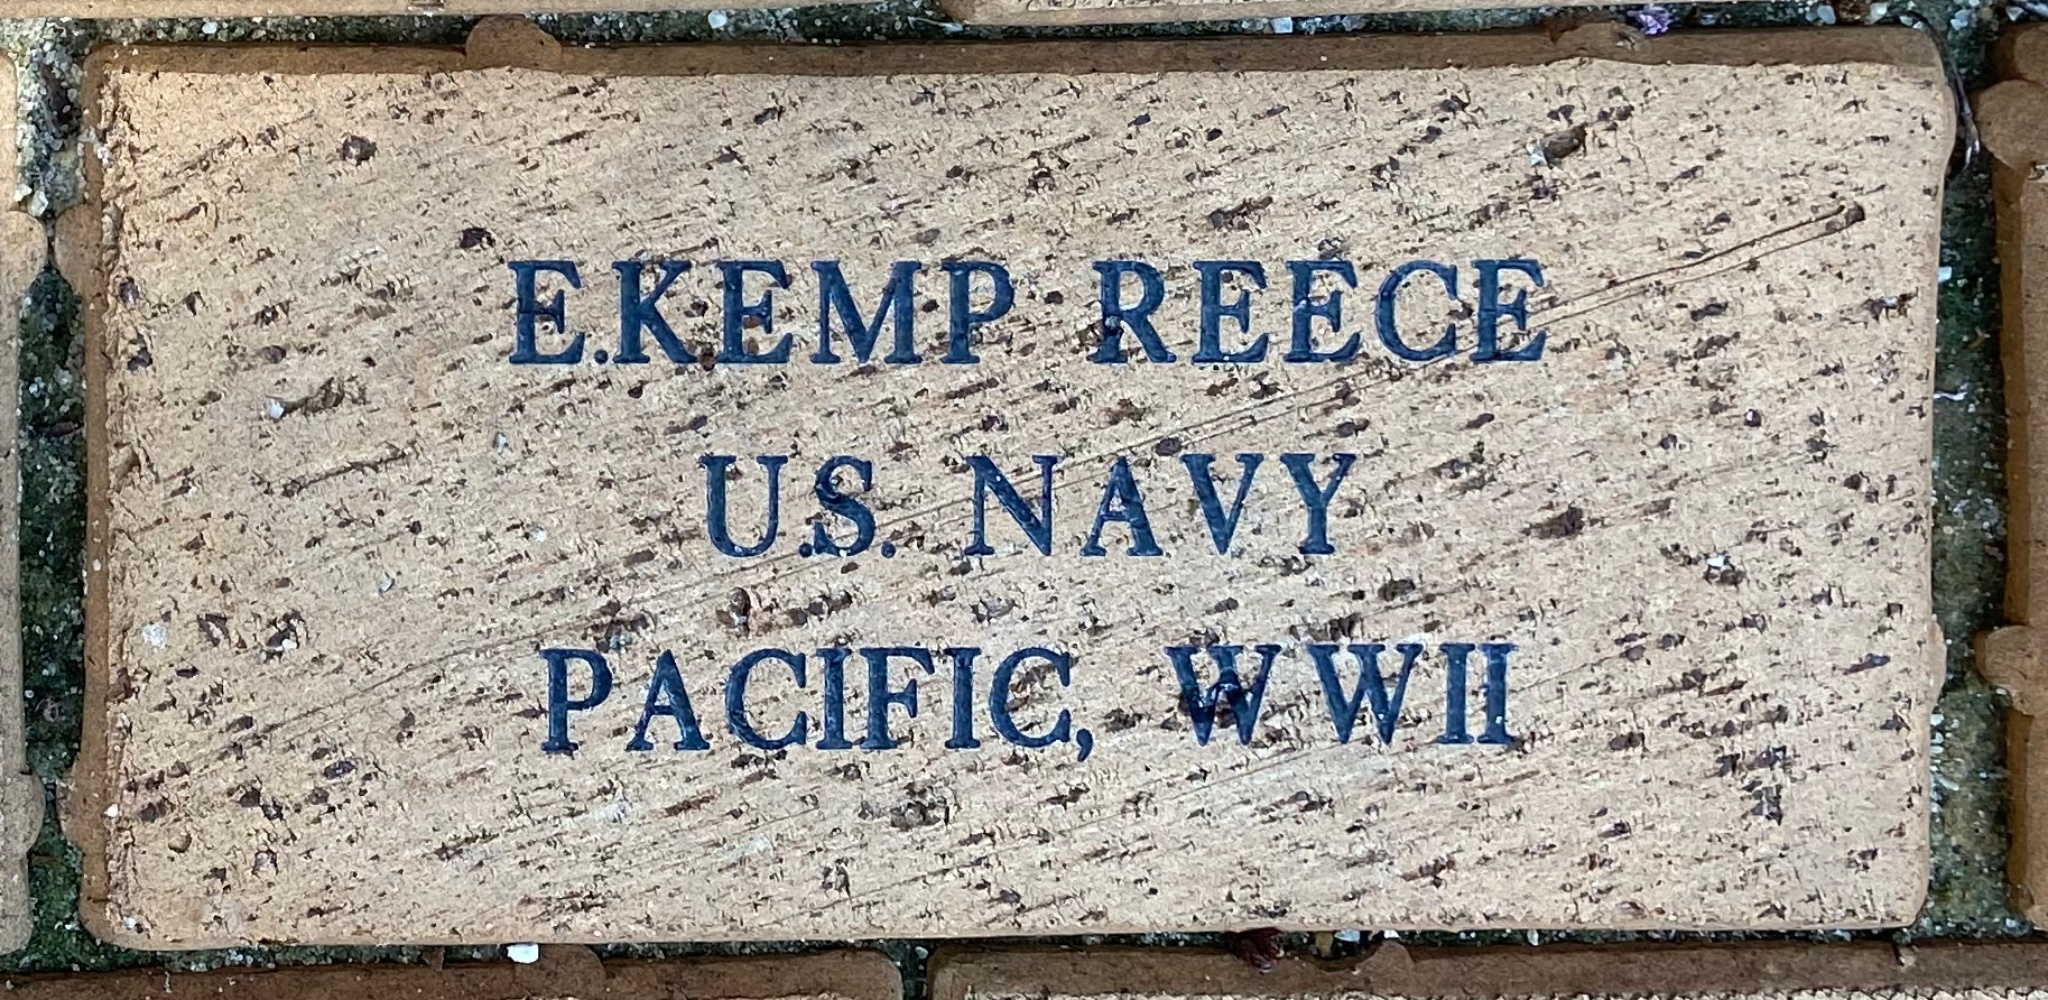 E.KEMP REECE U.S. NAVY  PACIFIC, WWII